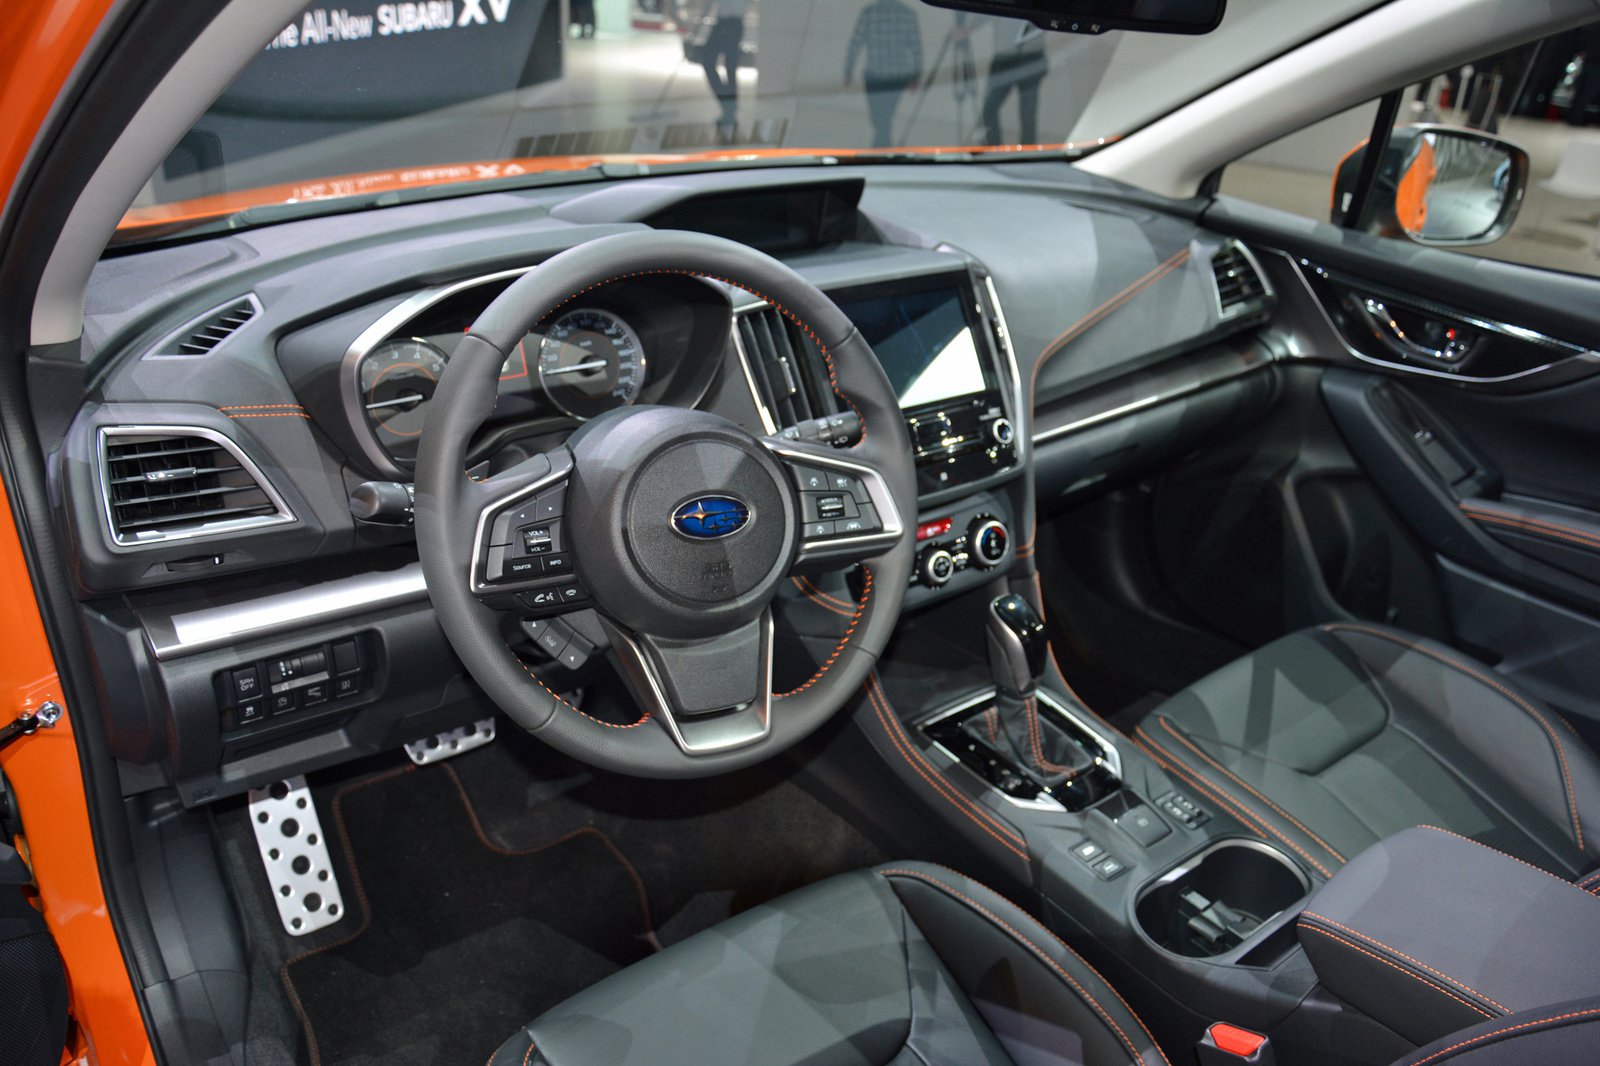 Subaru XV 2018 interior front view